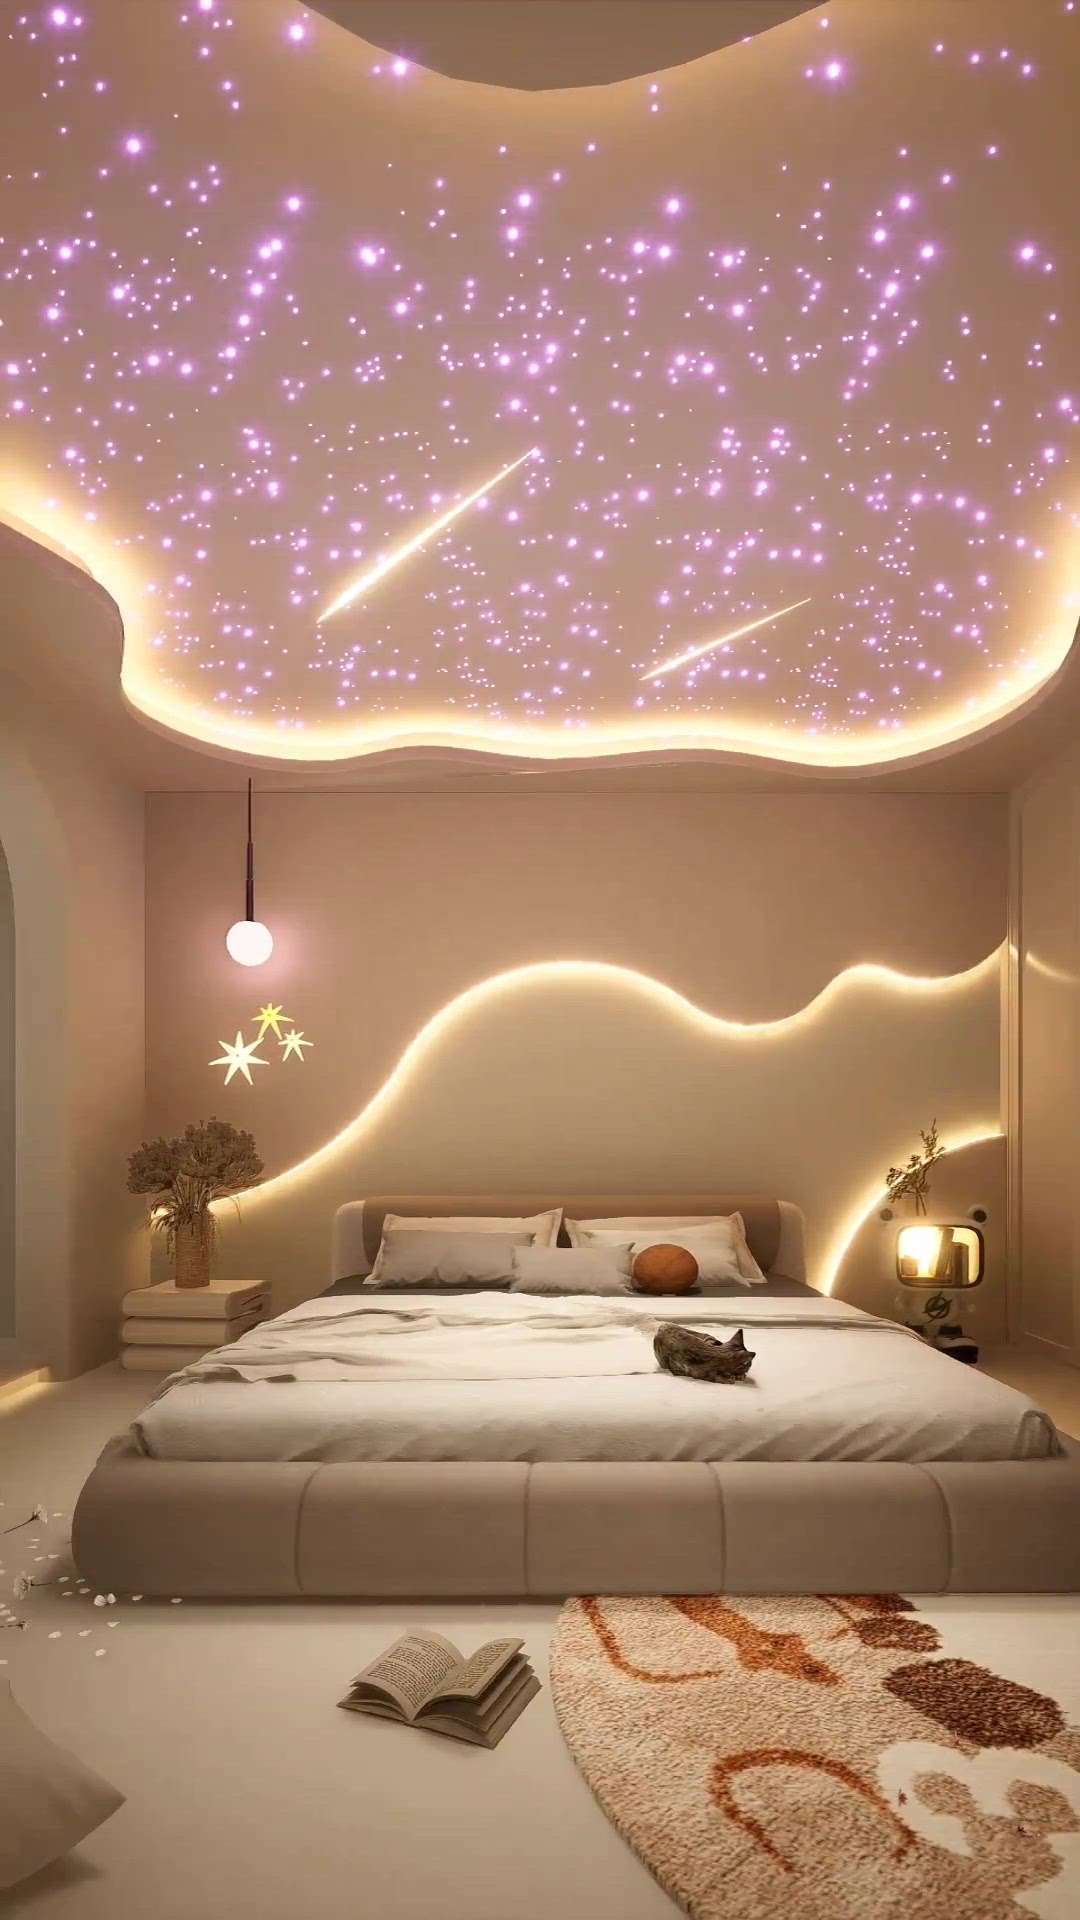 Laxury bedroom interior design
#laxuary #InteriorDesigner #BedroomDecor #MasterBedroom #ceilingdesign